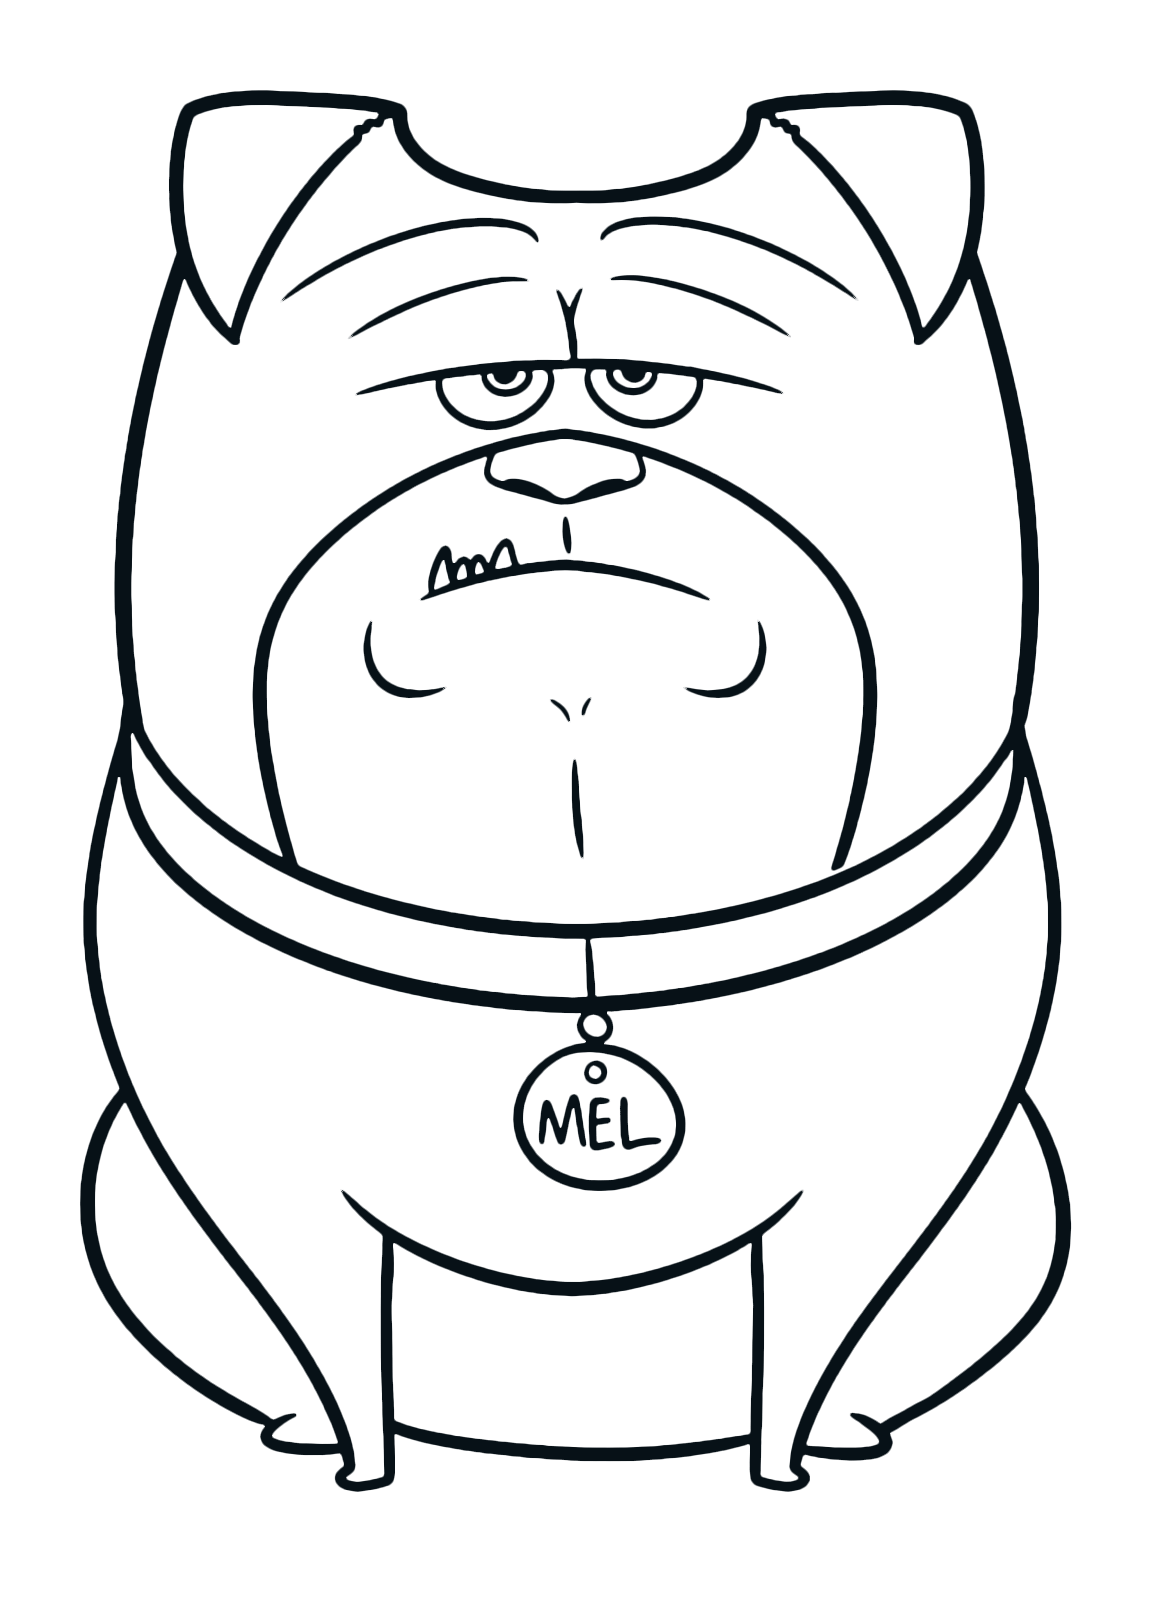 The Secret Life of Pets - Mel the funny pug friend of Max